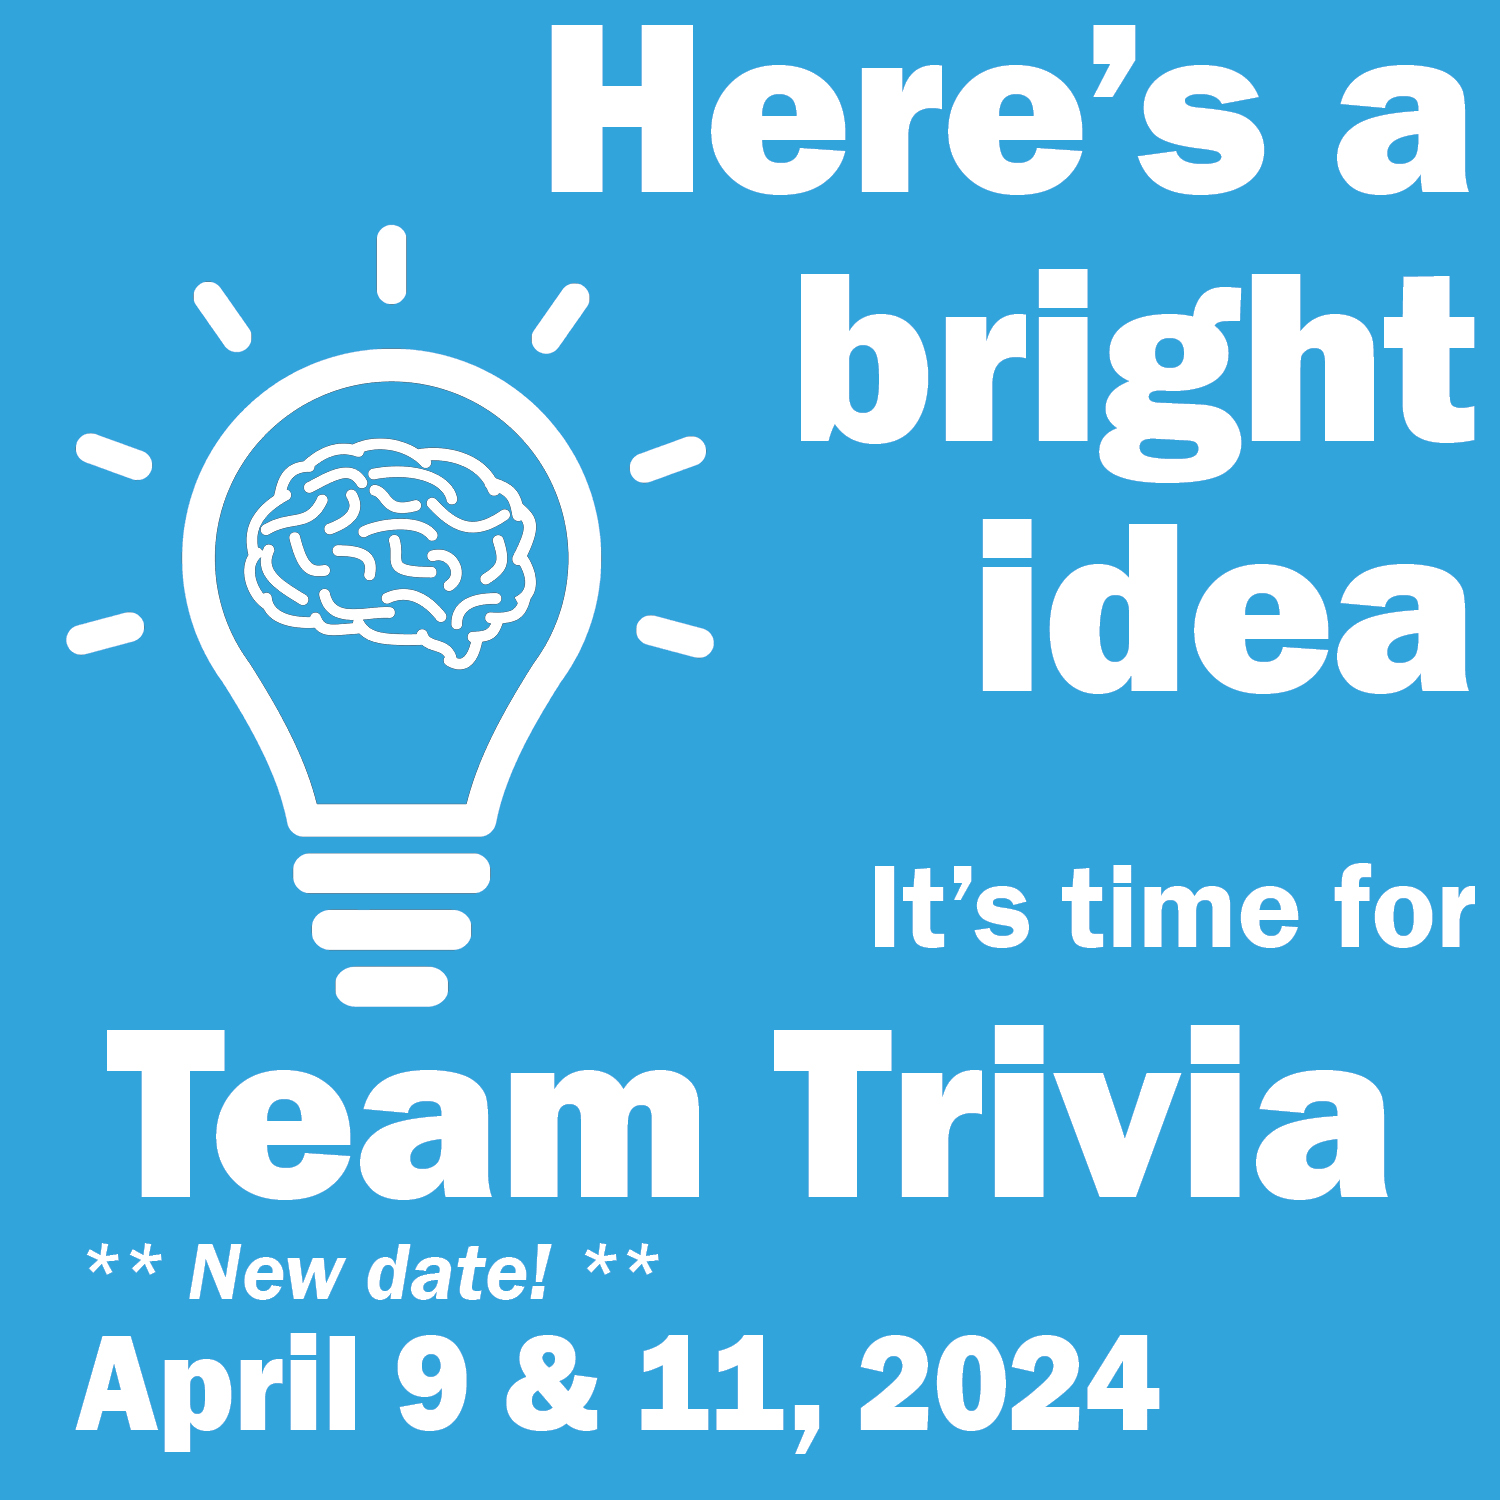 Calling all brainiacs as Team Trivia returns in person April 9 & 11